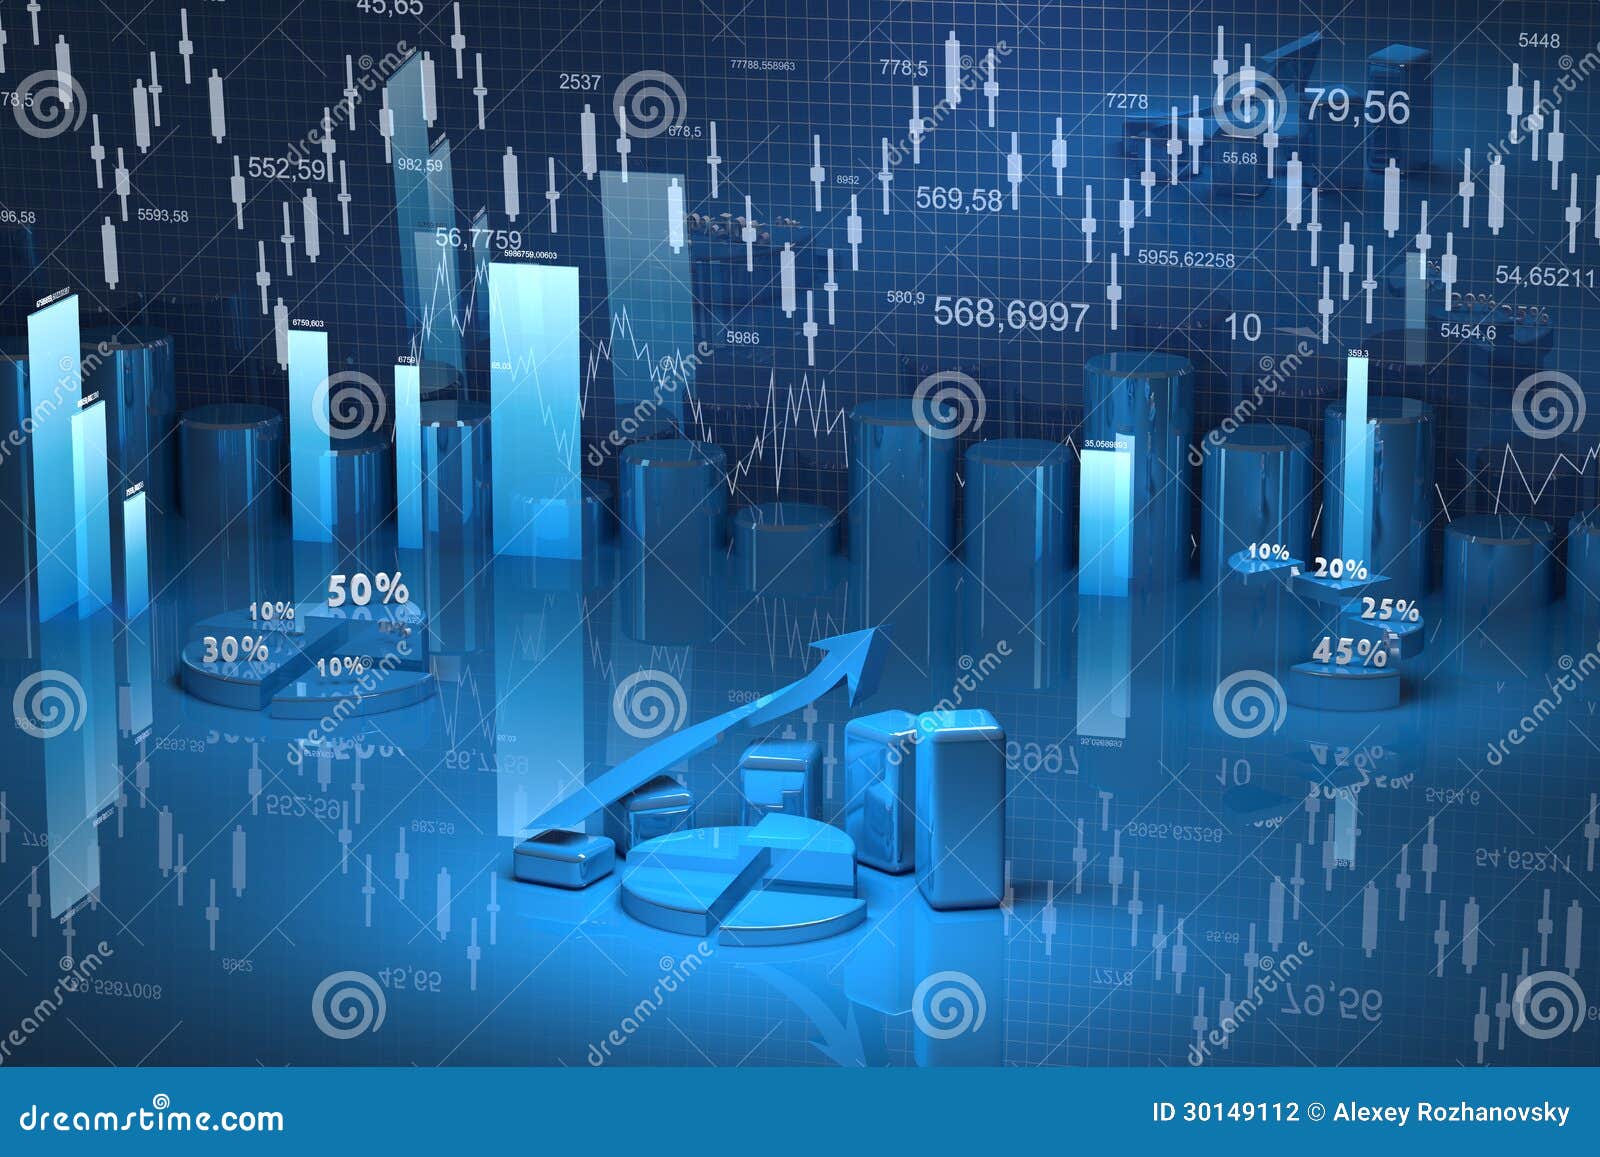 blue-business-finance-chart-diagram-bar-graphic-30149112.jpg